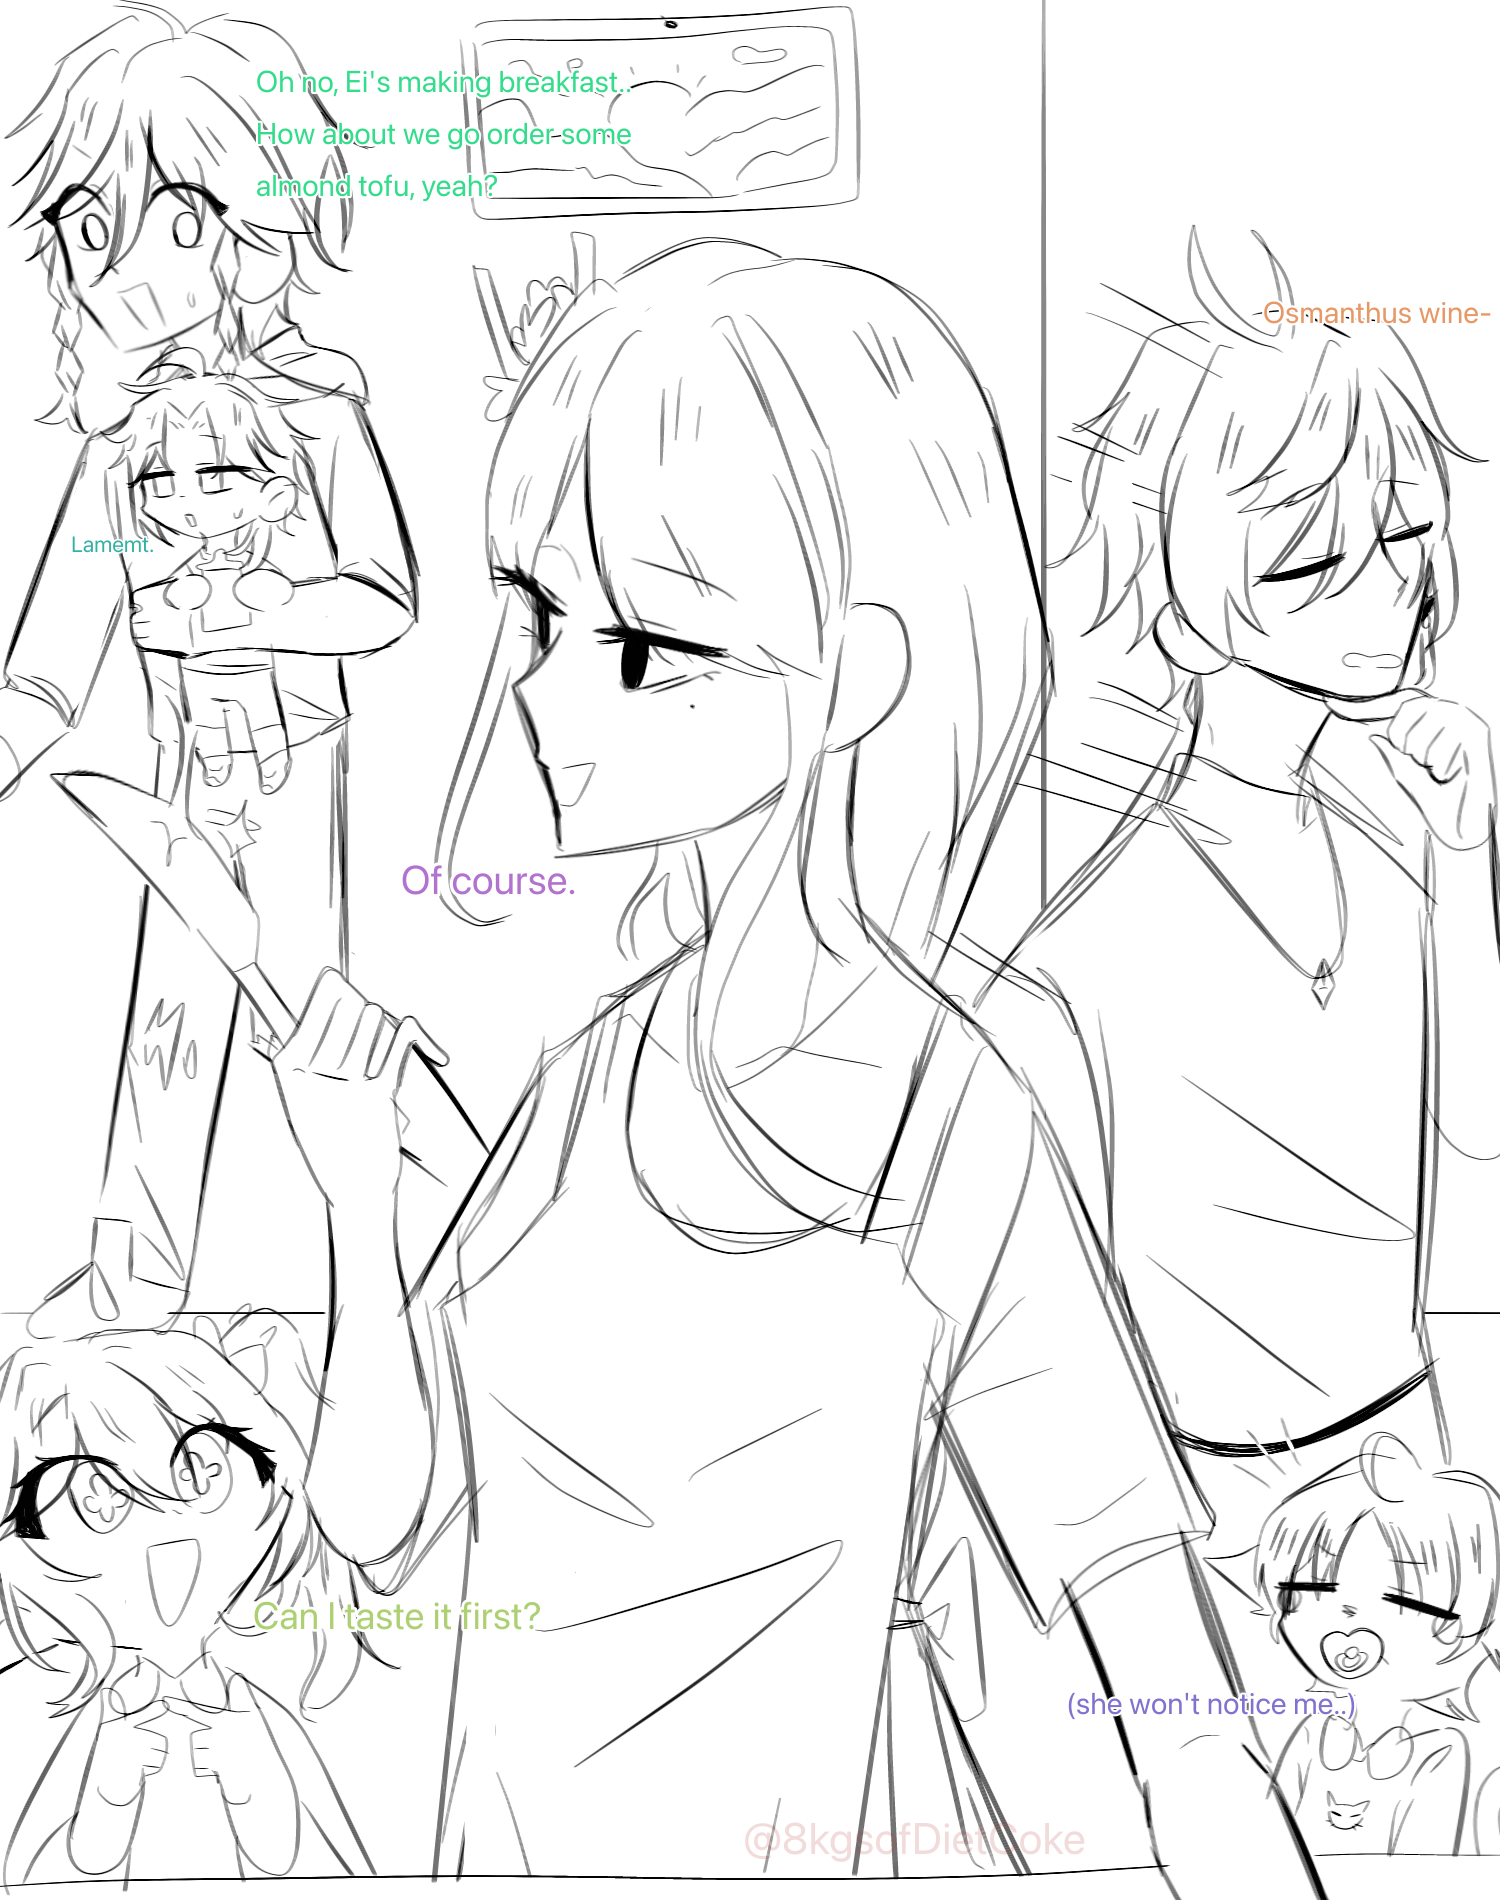 Archon family sketch because boredom. (+ xiao and scararat) | Fandom